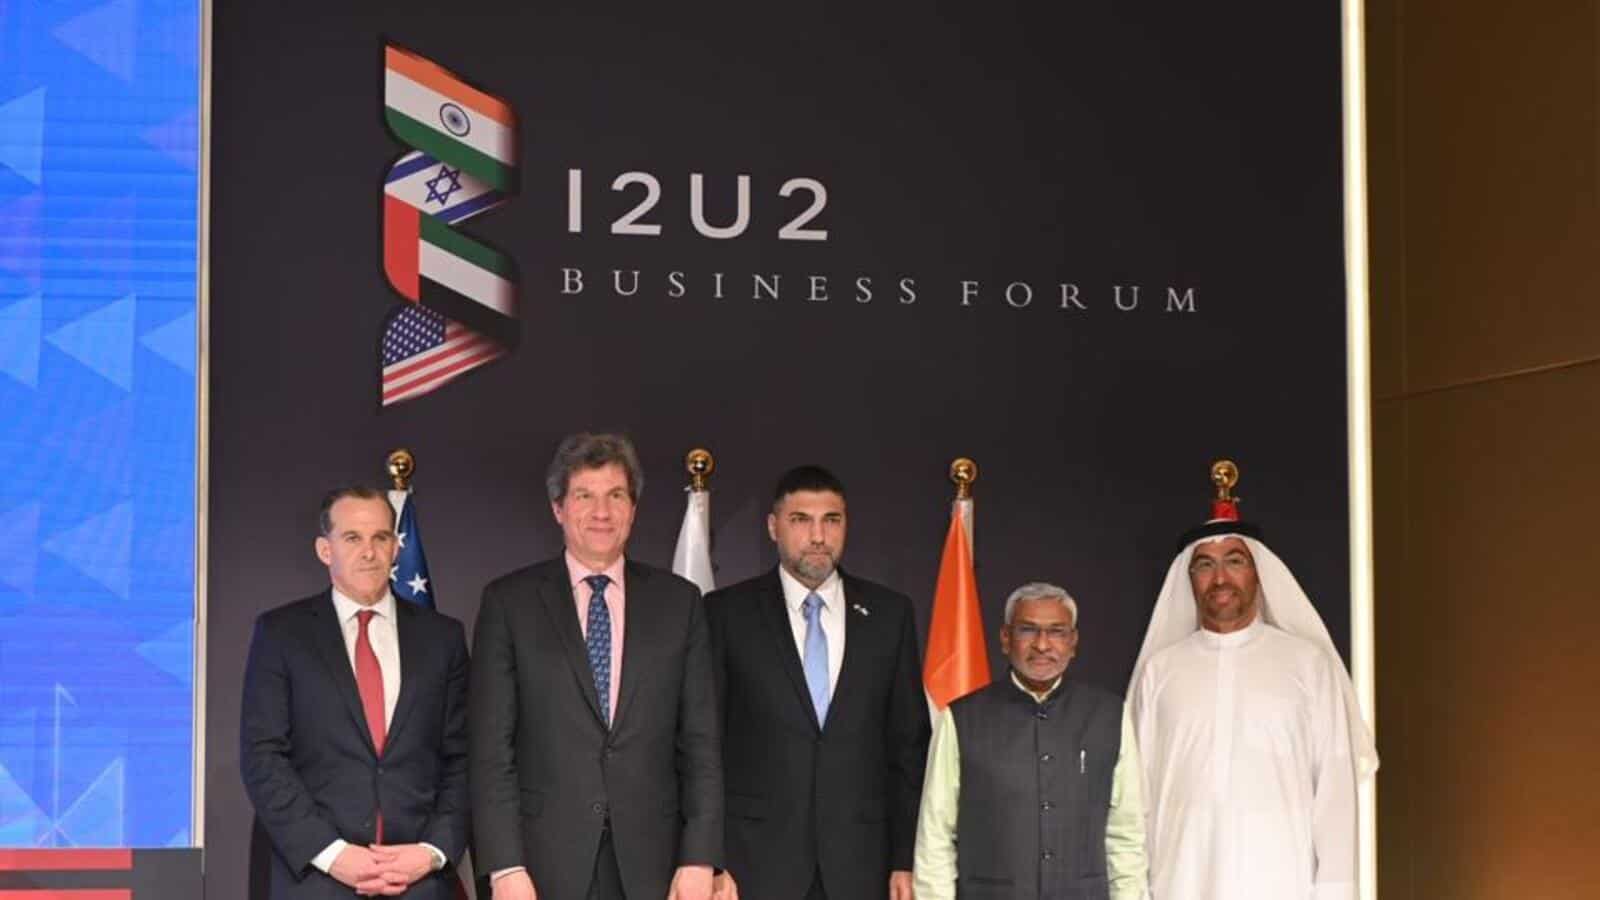 I2U2 Business Forum holds inaugural meeting in Abu Dhabi | Latest News India